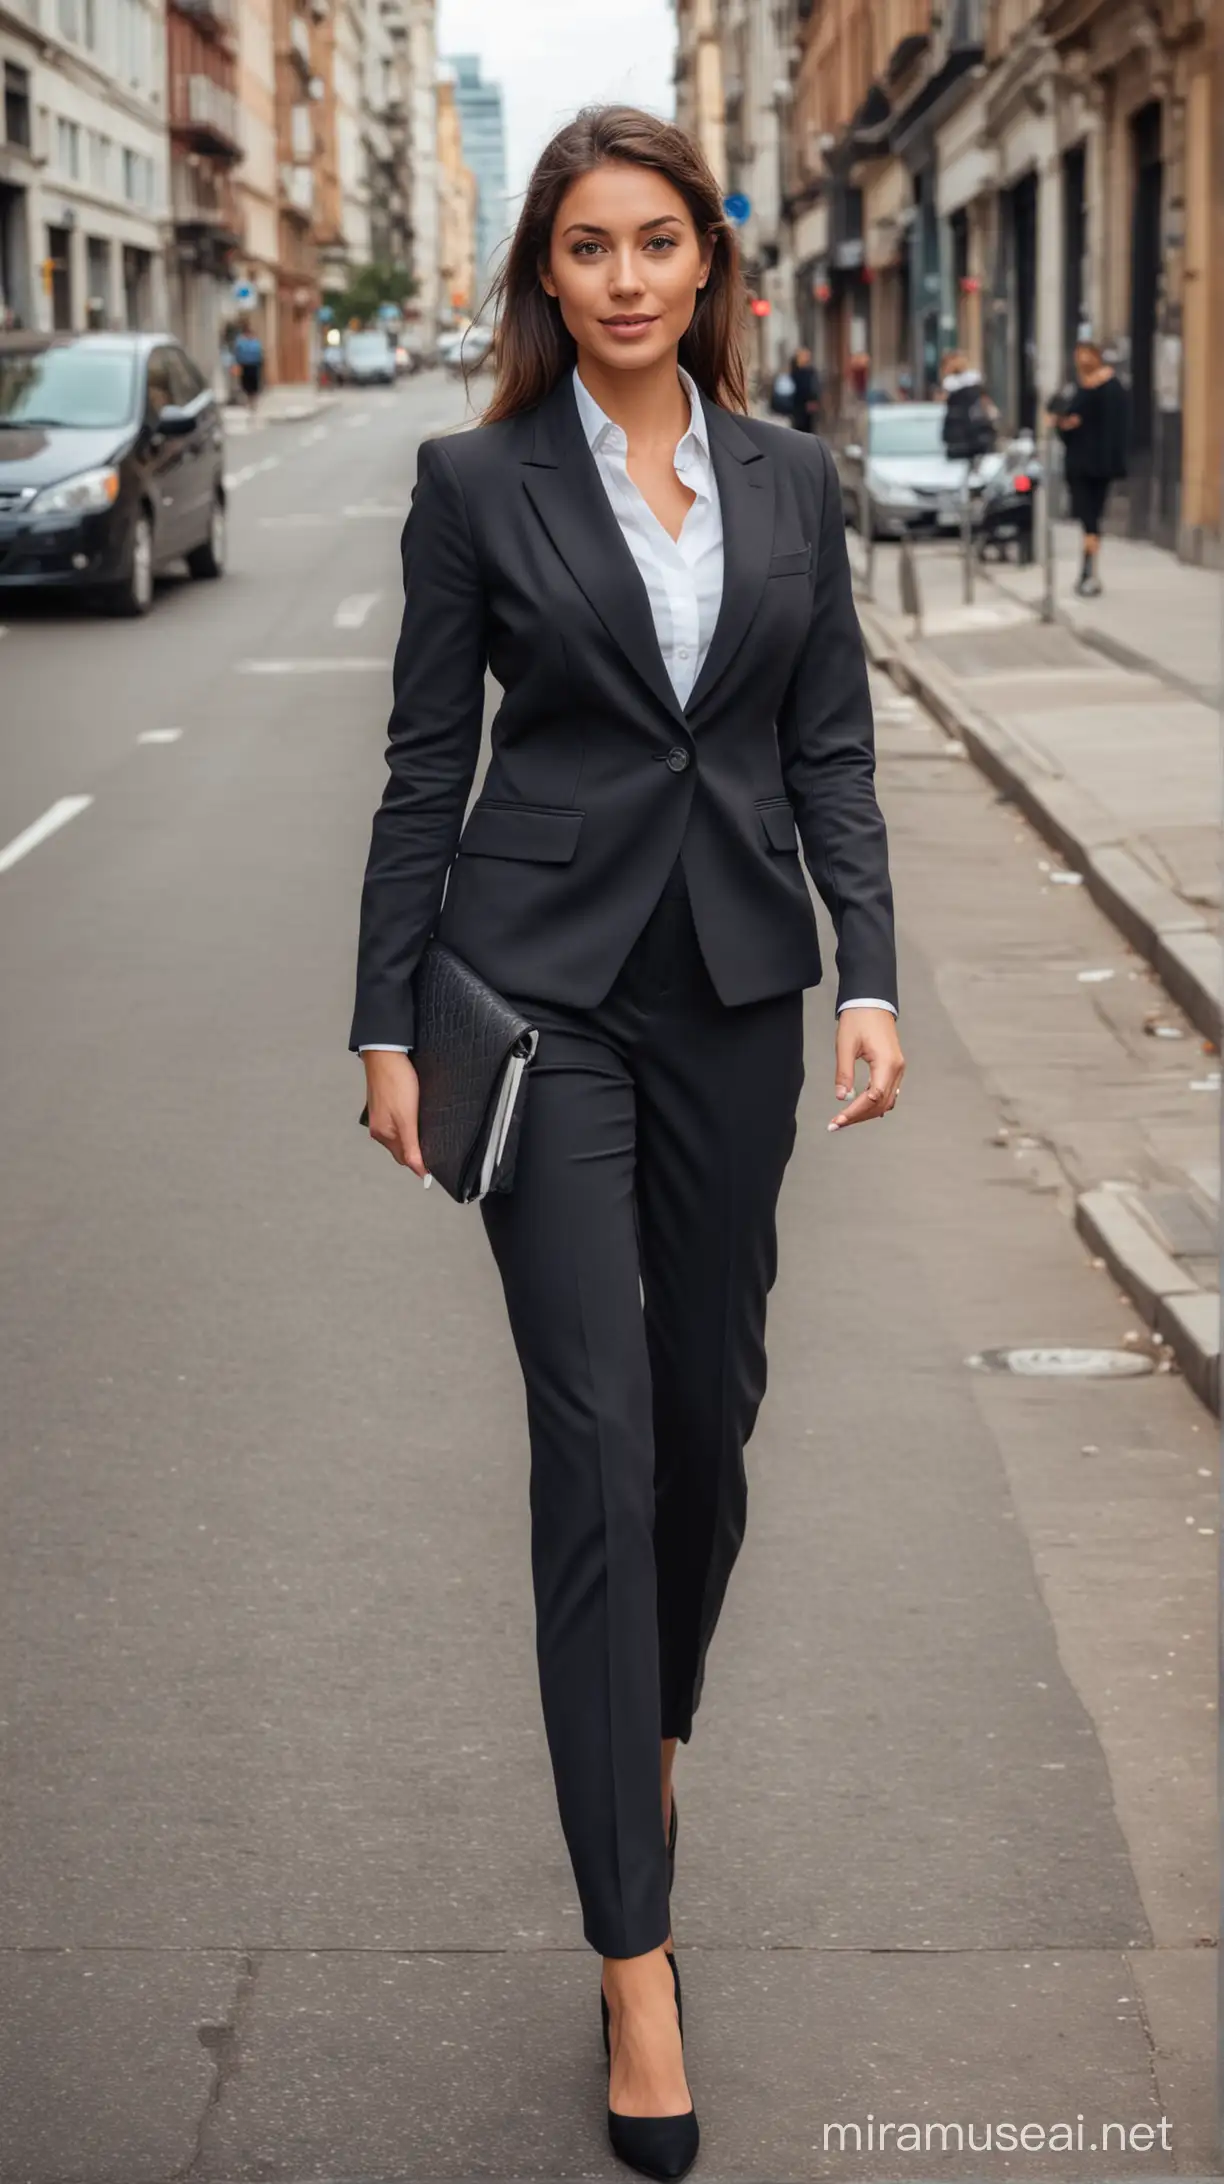 Professional Business Woman in Formal Attire on Urban Street